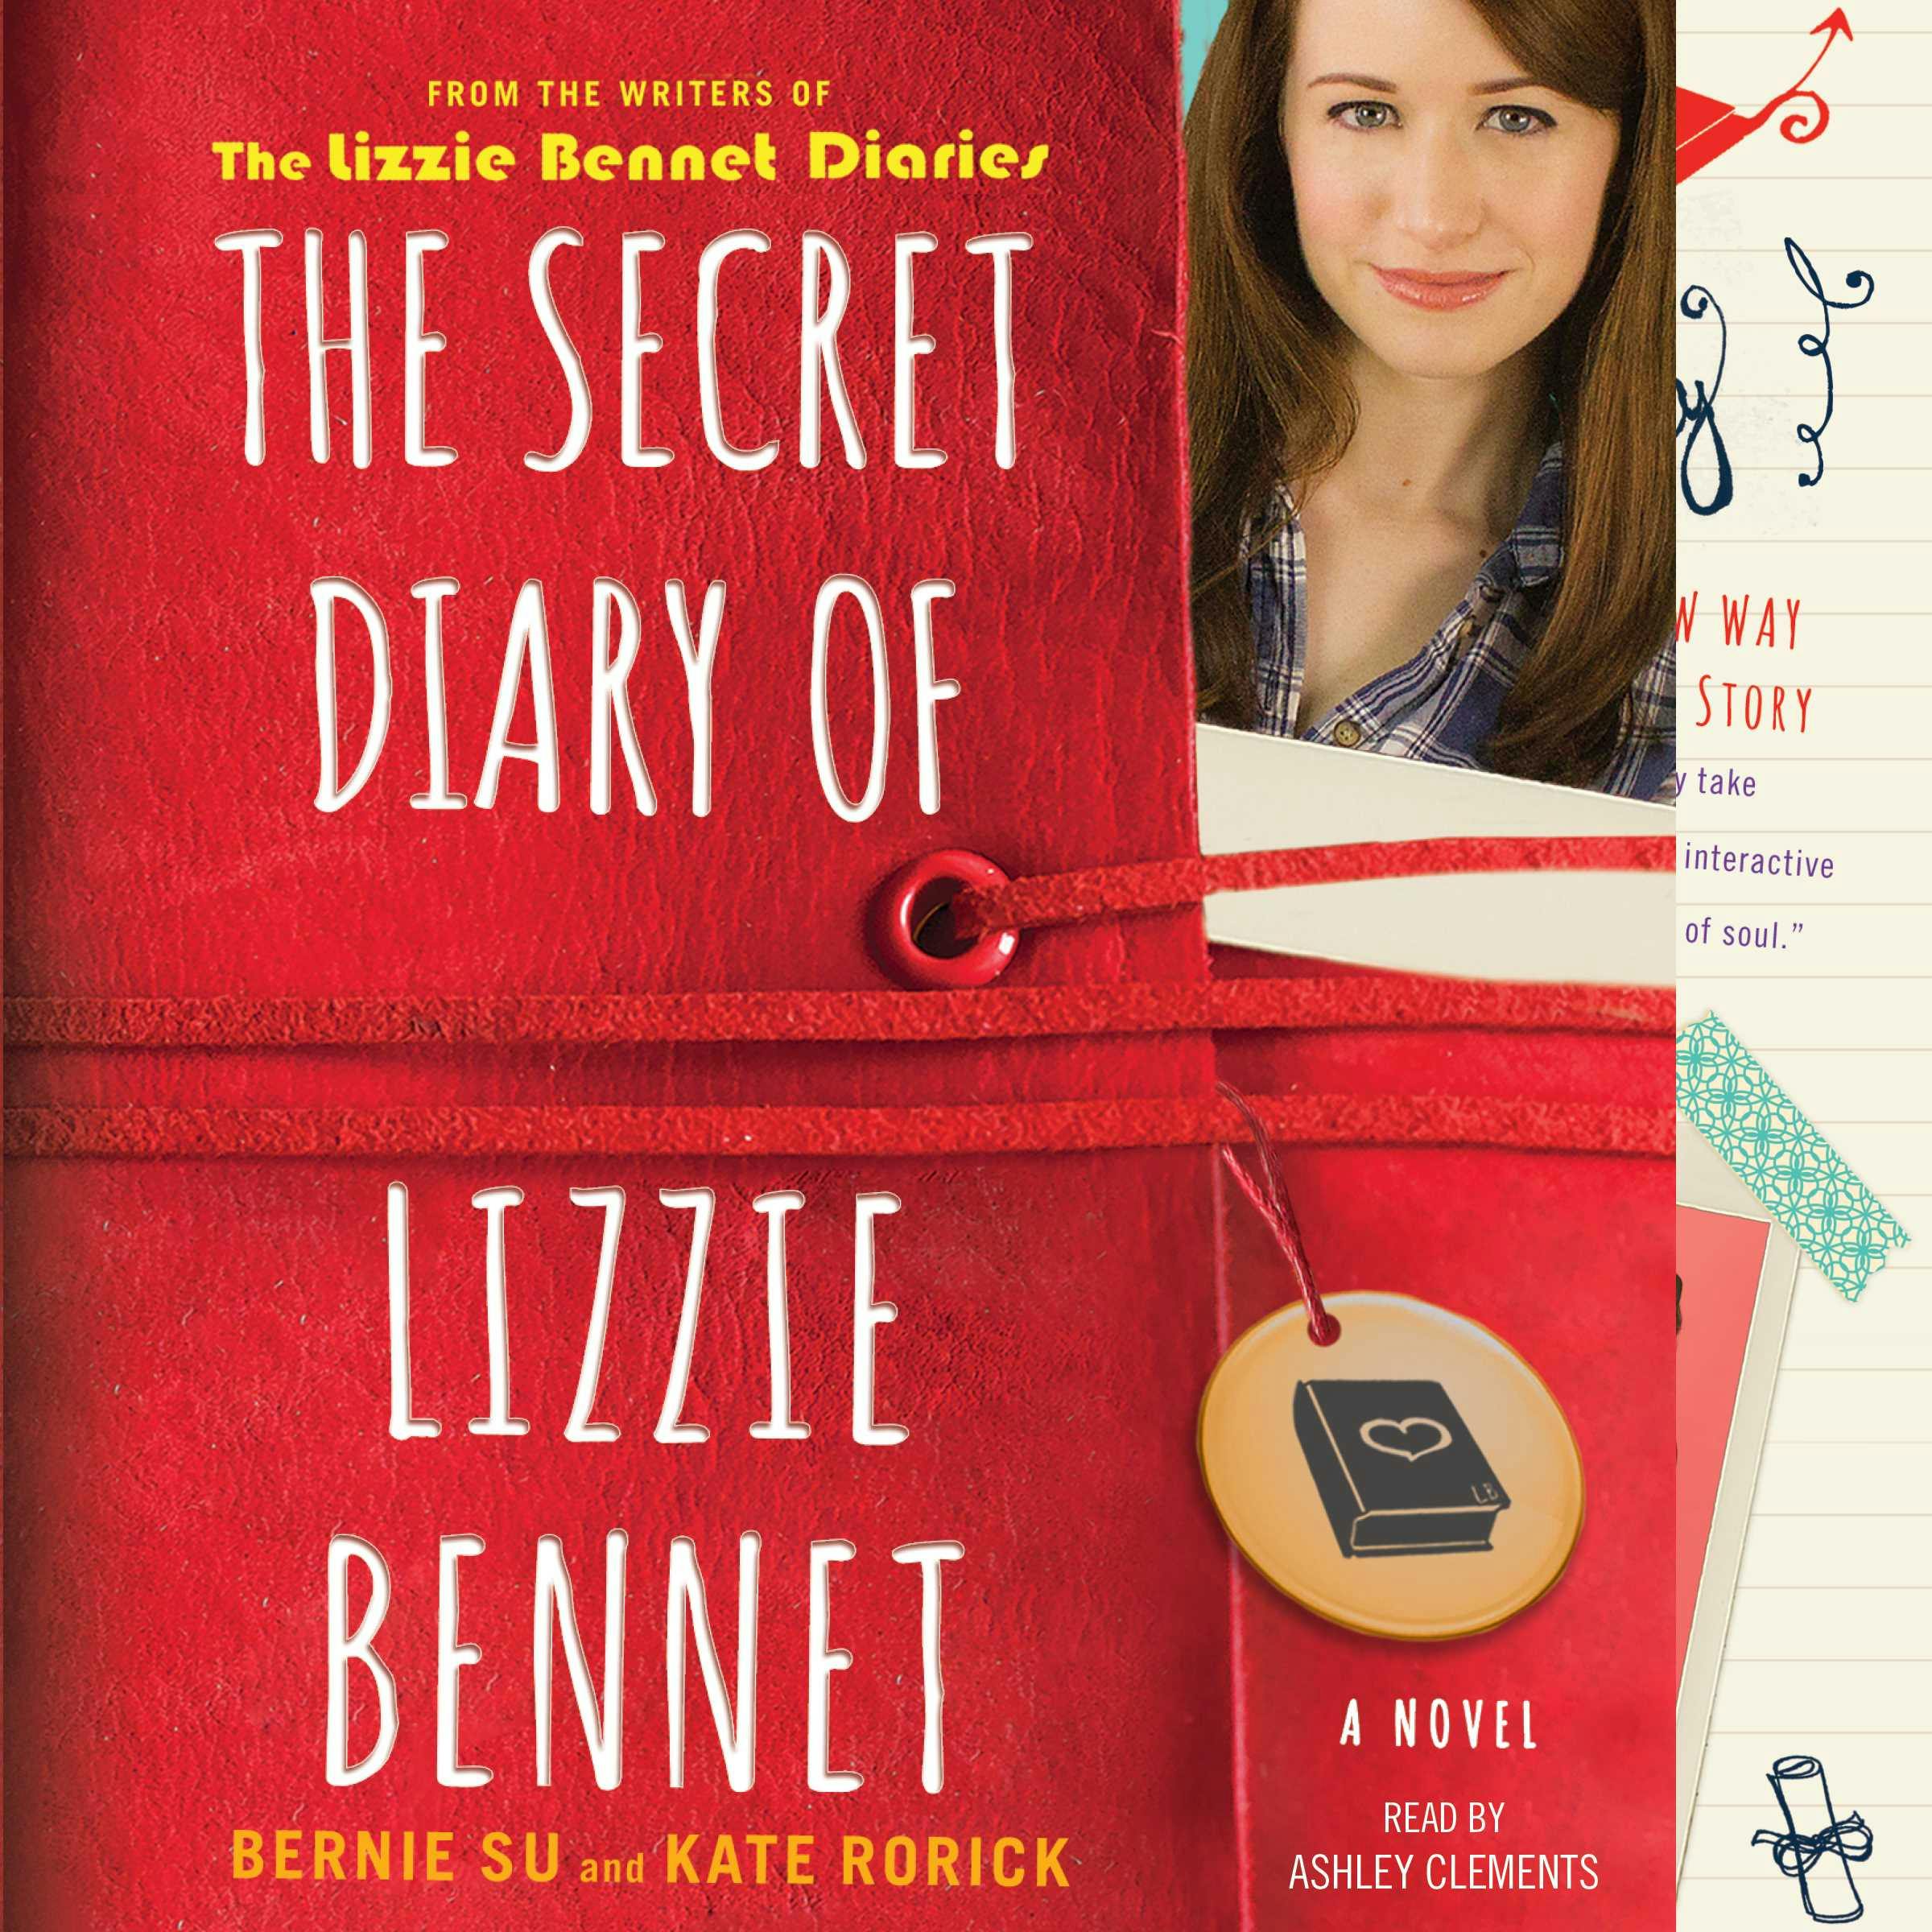 The Secret Diary of Lizzie Bennet: A Novel - Kate Rorick, Bernie Su